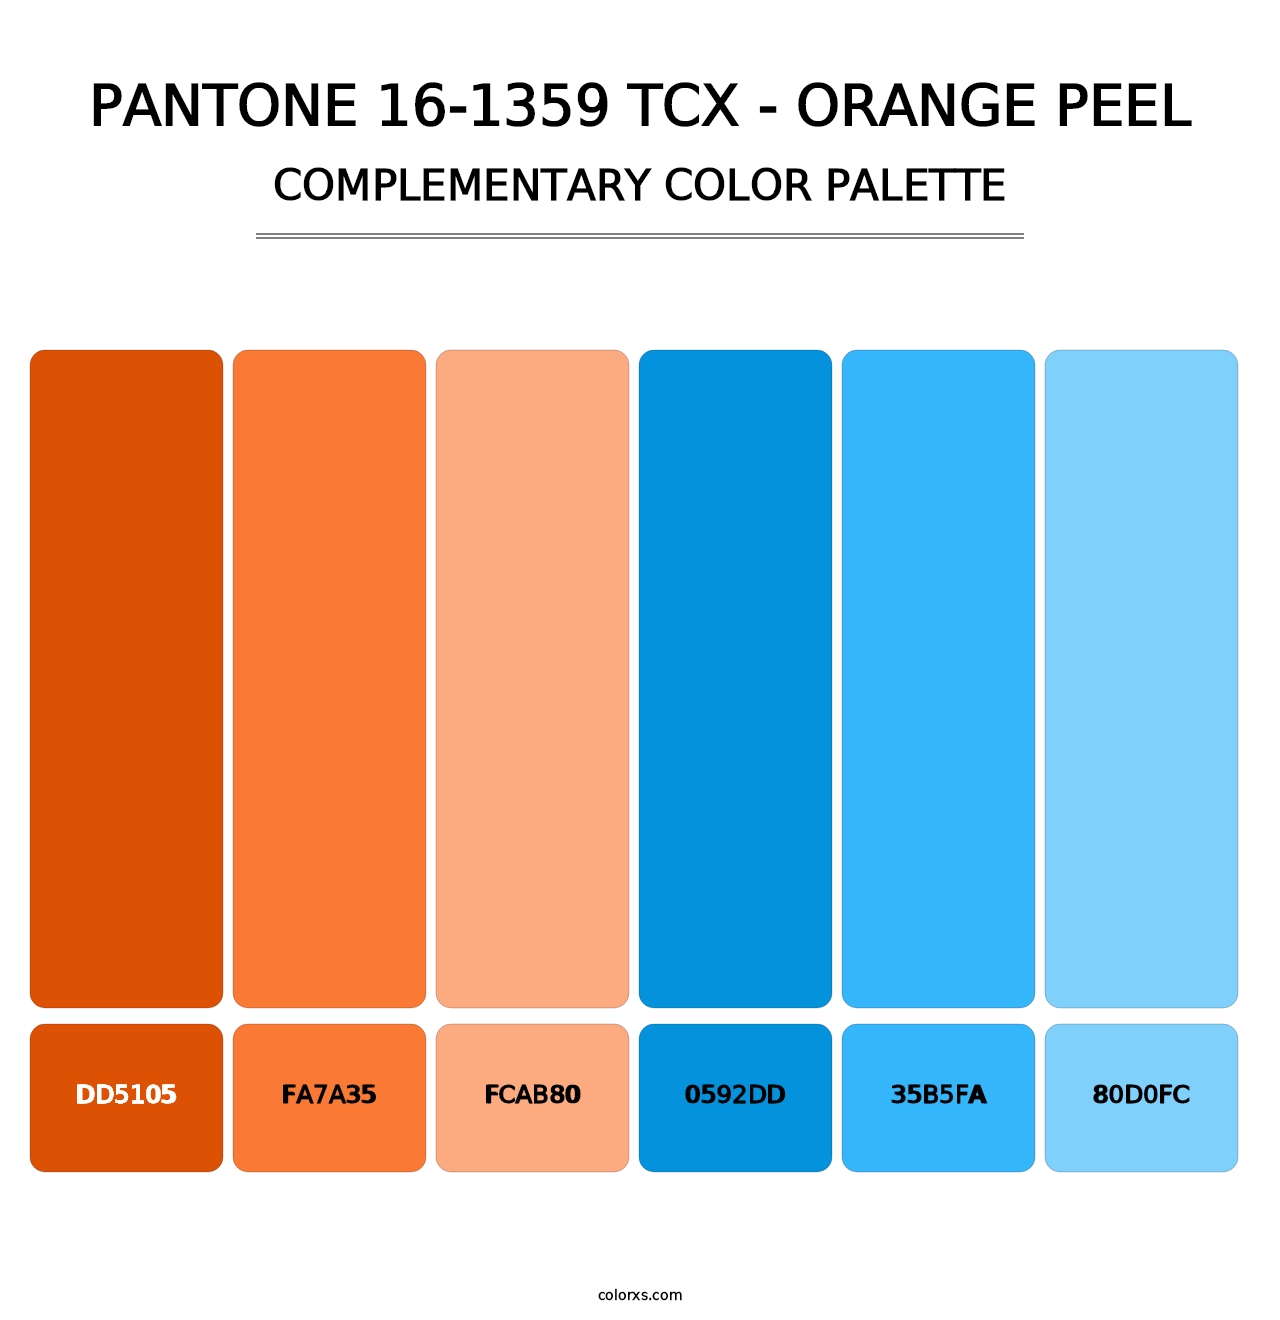 PANTONE 16-1359 TCX - Orange Peel - Complementary Color Palette